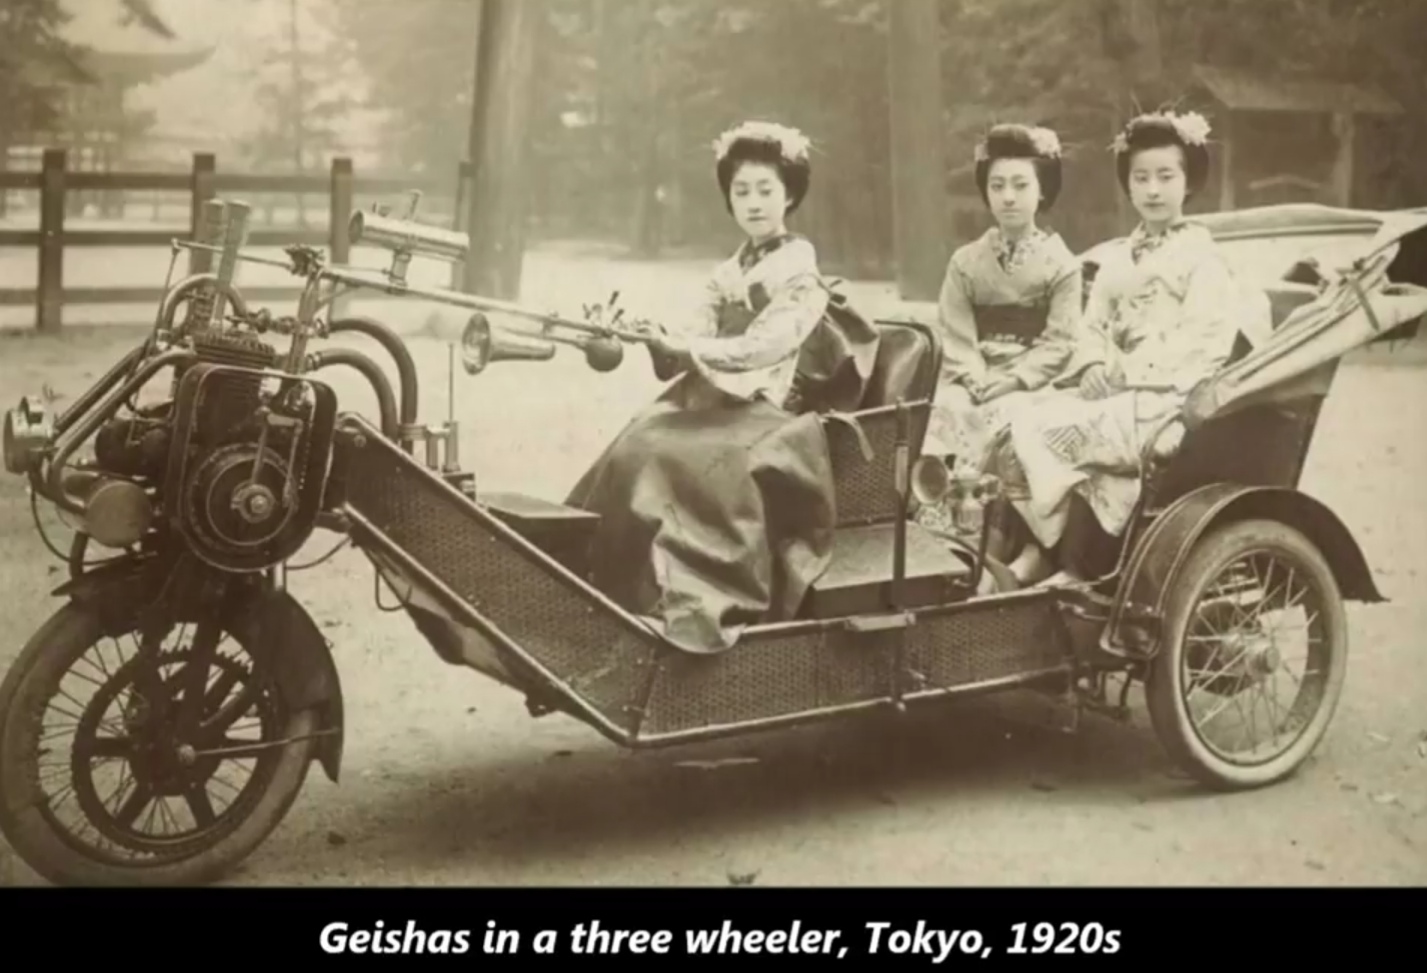 japanese women 1920's - Geishas in a three wheeler, Tokyo, 1920s